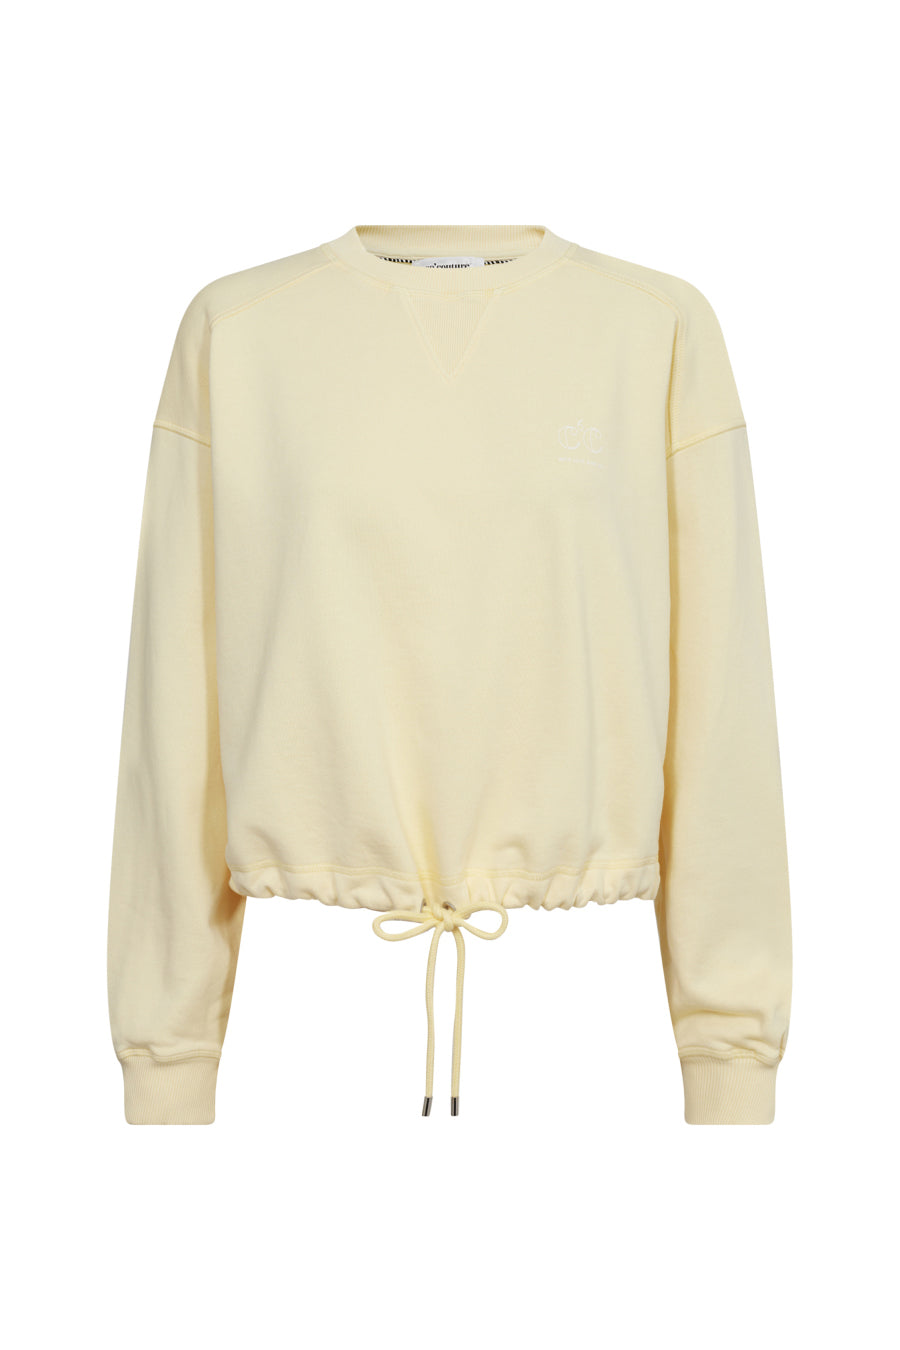 Co'Couture Clean Crop Tie Sweatshirt - Pale Yellow - RUM Amsterdam